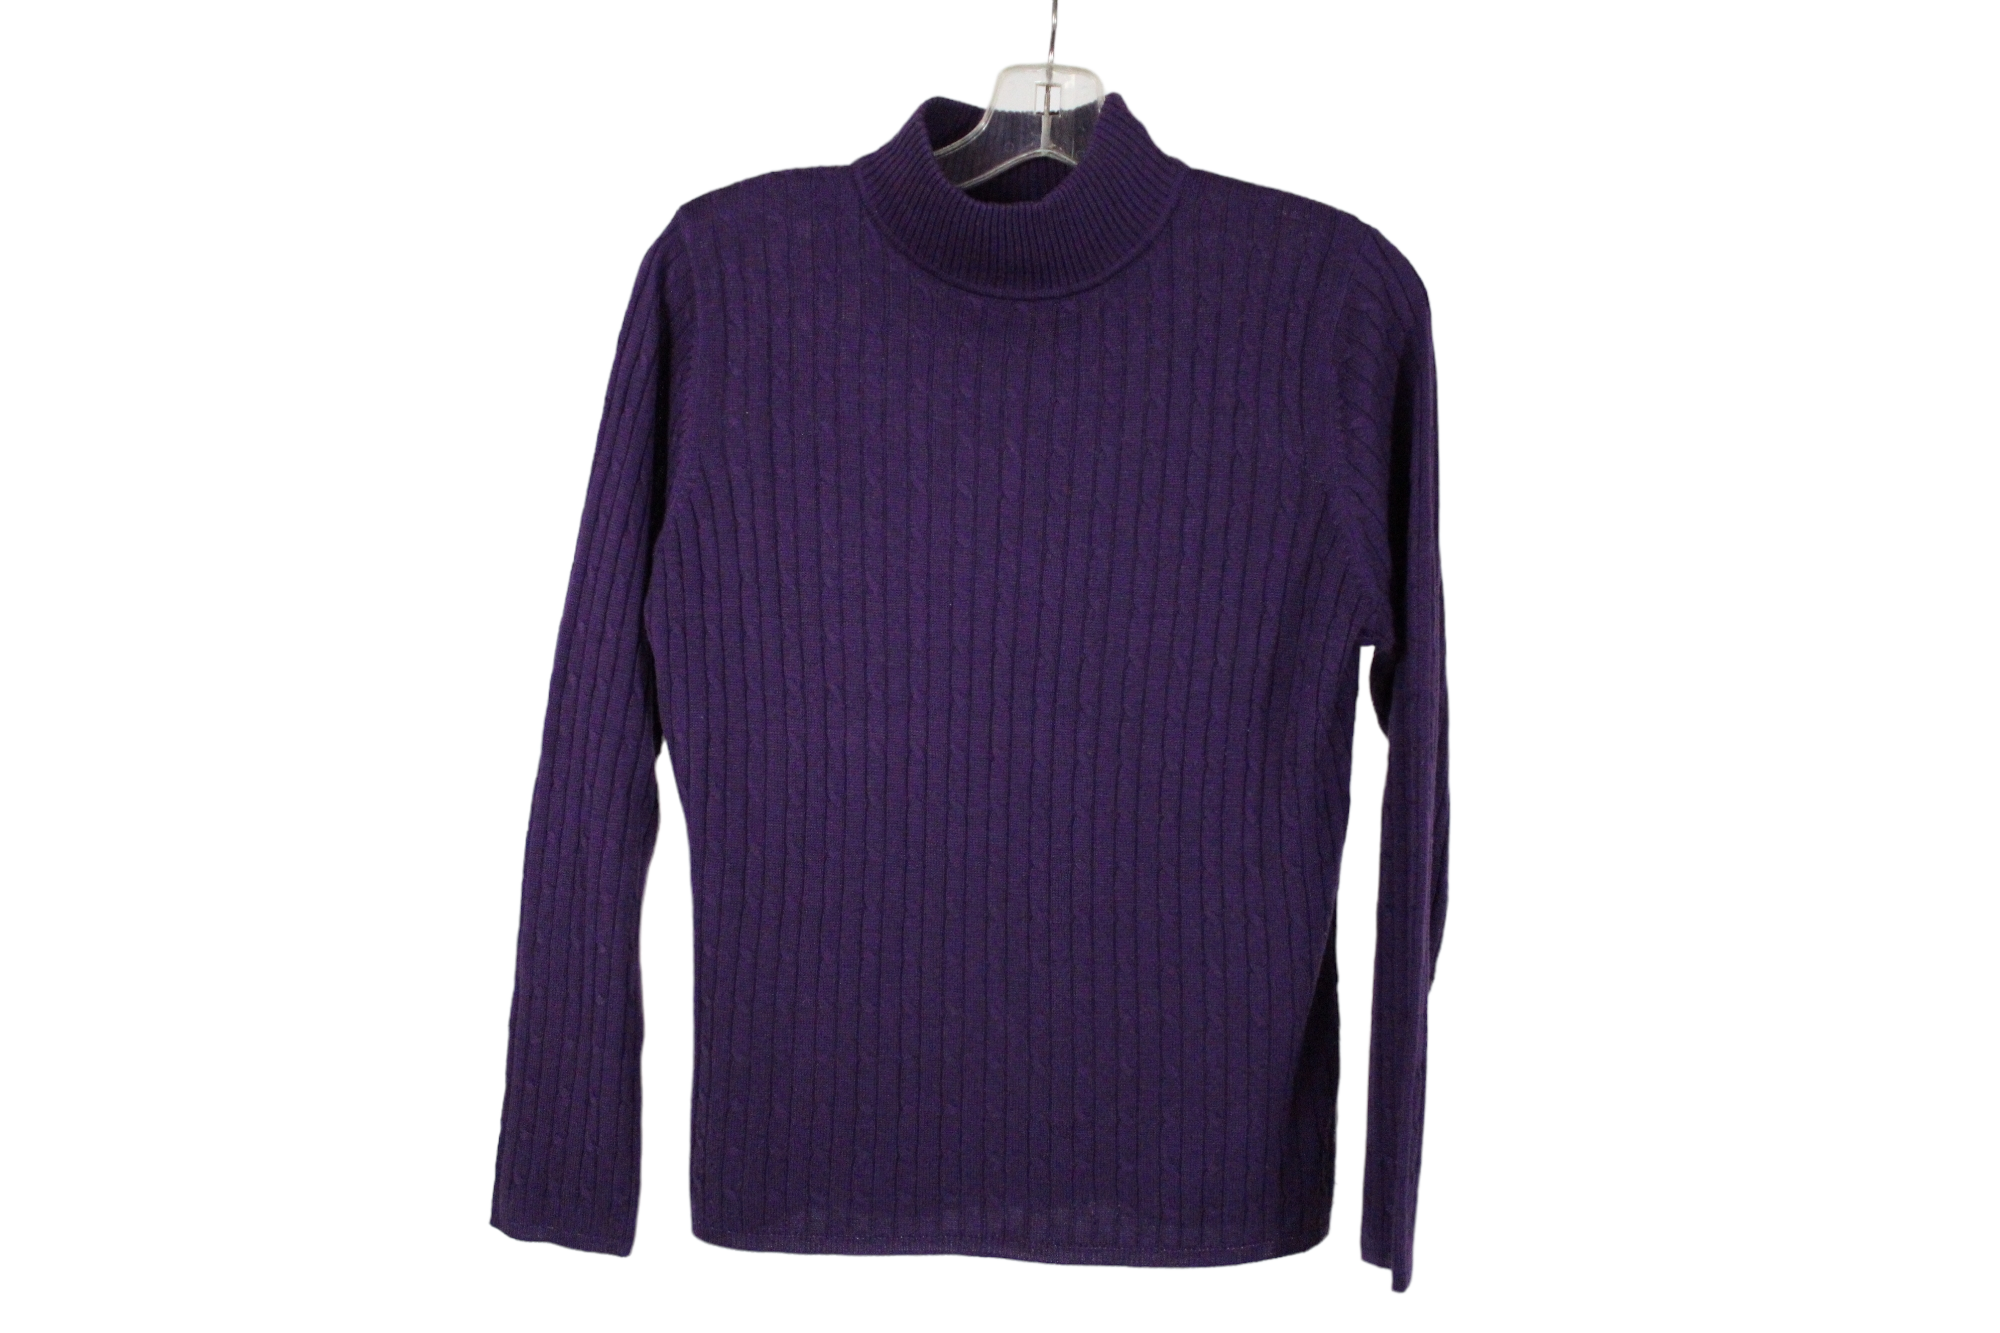 Croft & Barrow Purple Cable Knit Style Soft Sweater | M Petite